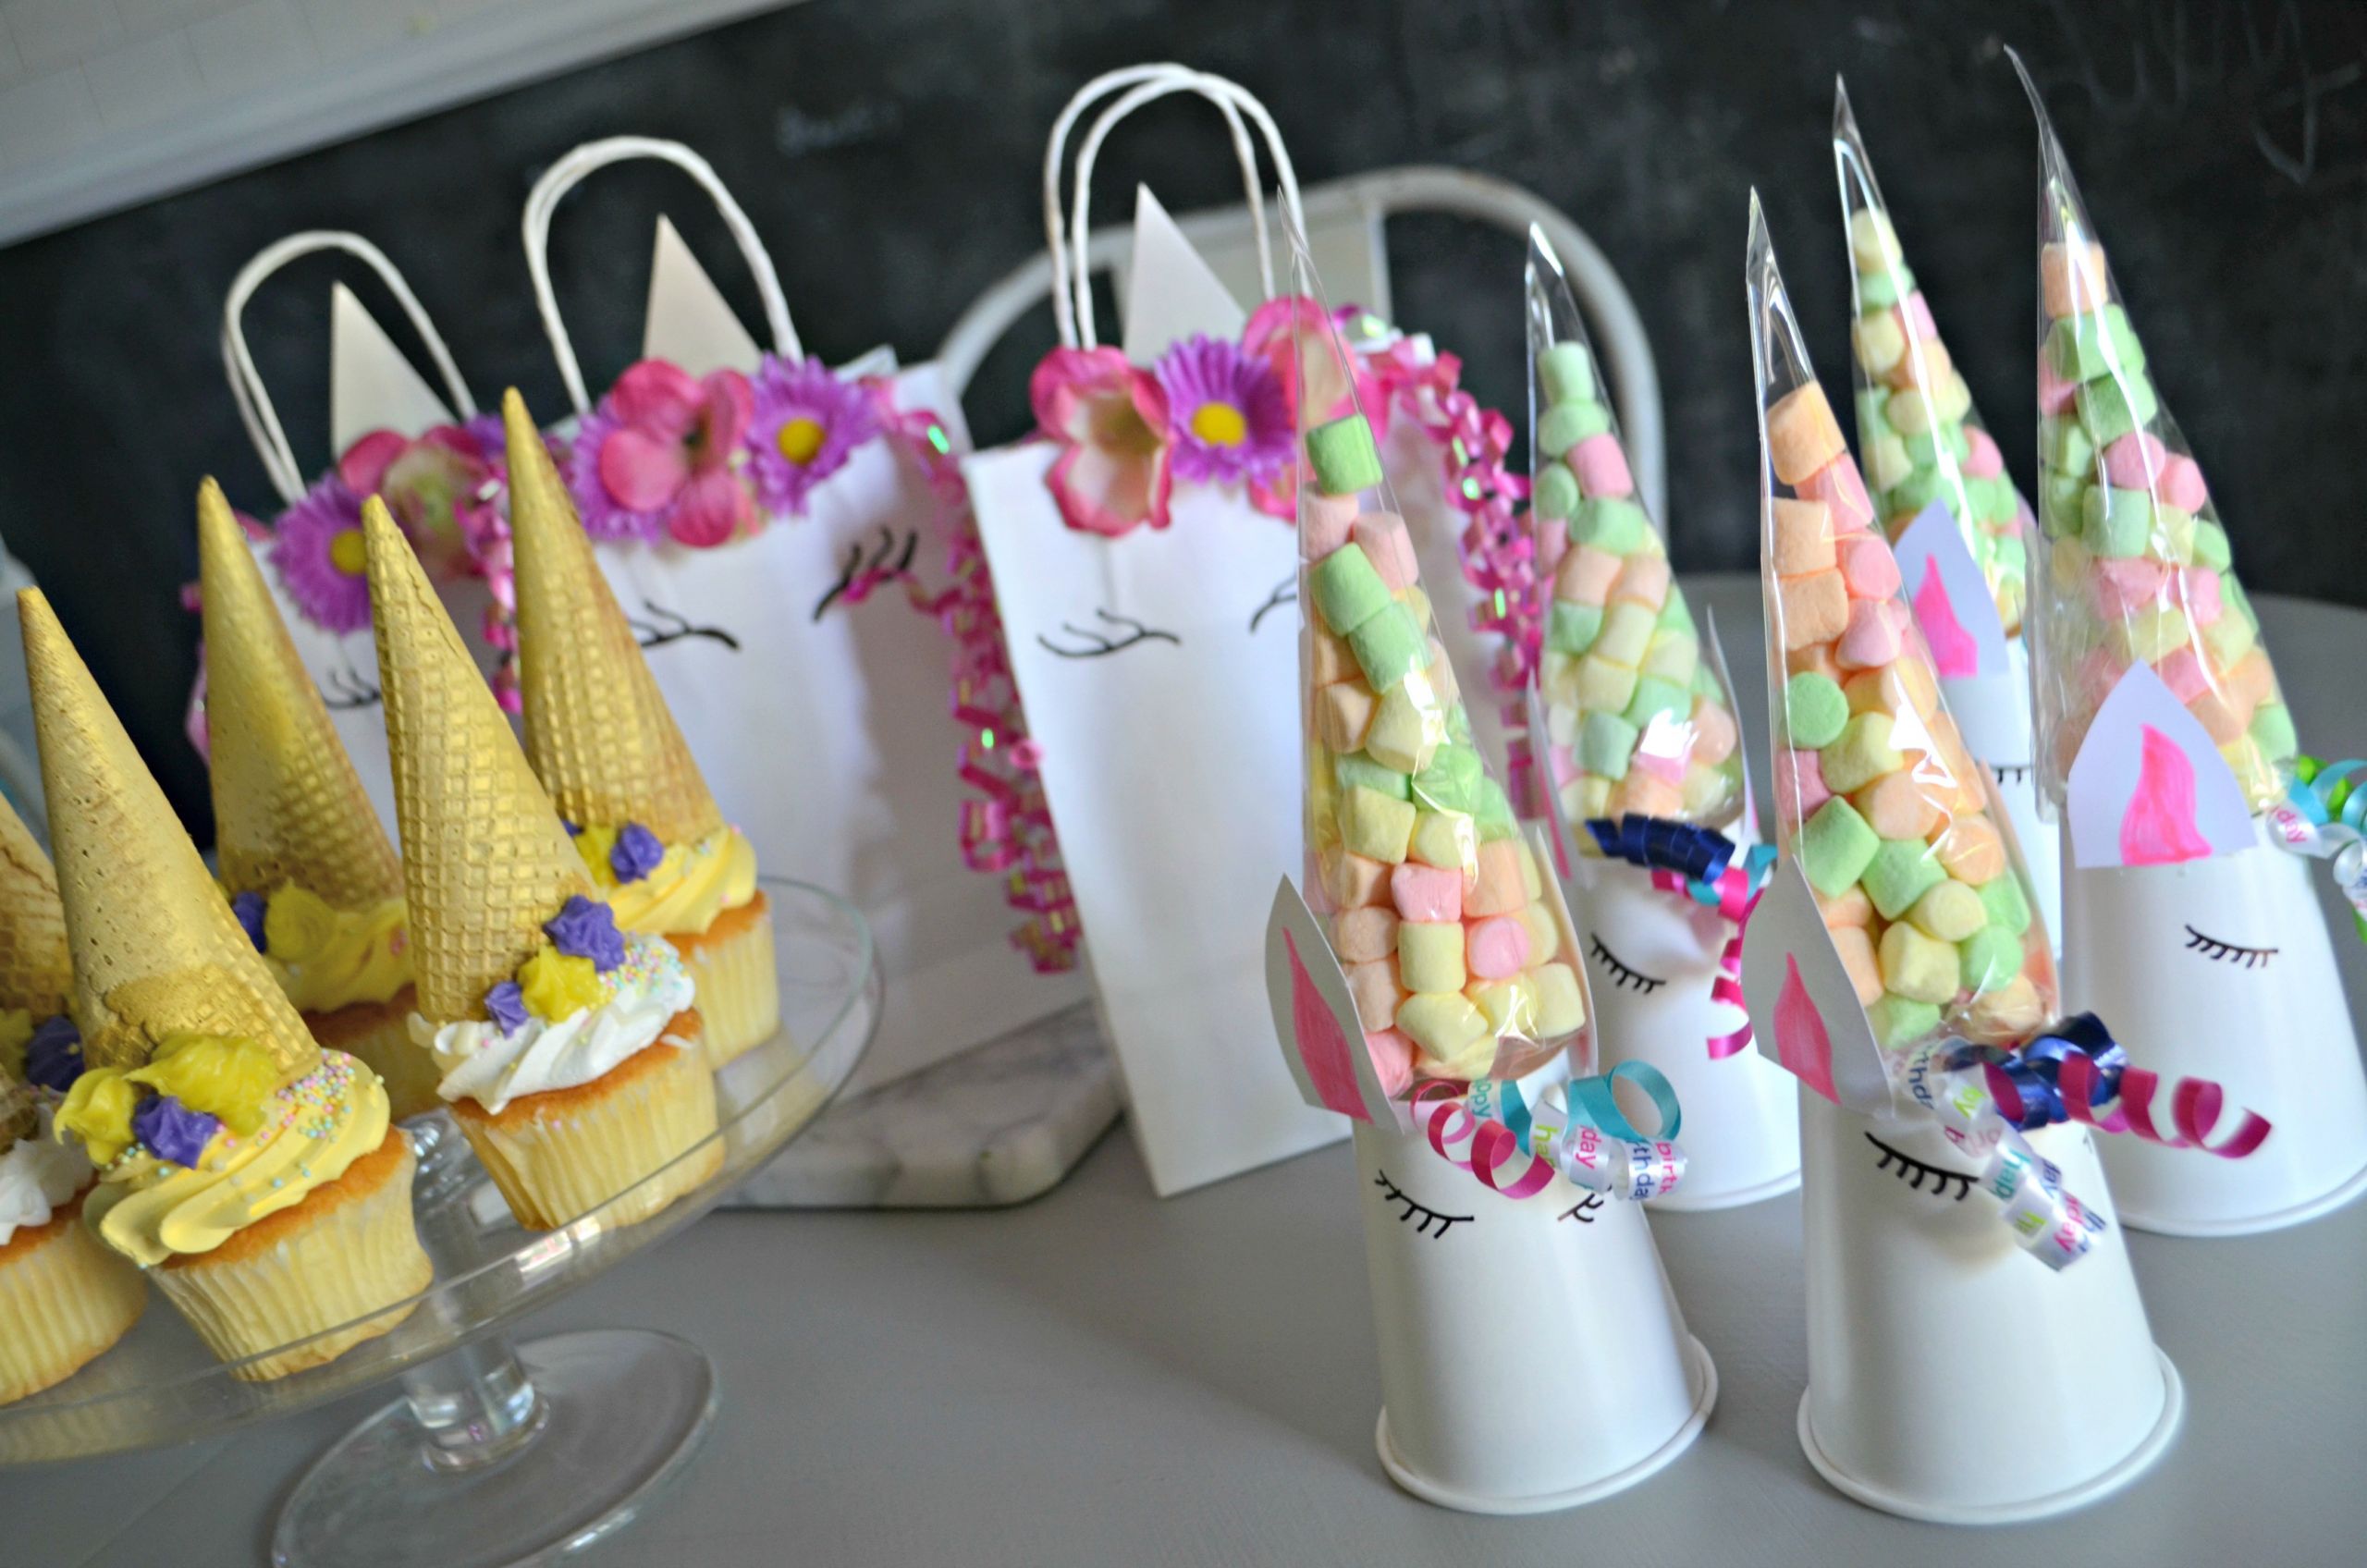 Unicorn Birthday Party Decorations Ideas
 Make These 3 Frugal Cute and Easy DIY Unicorn Birthday